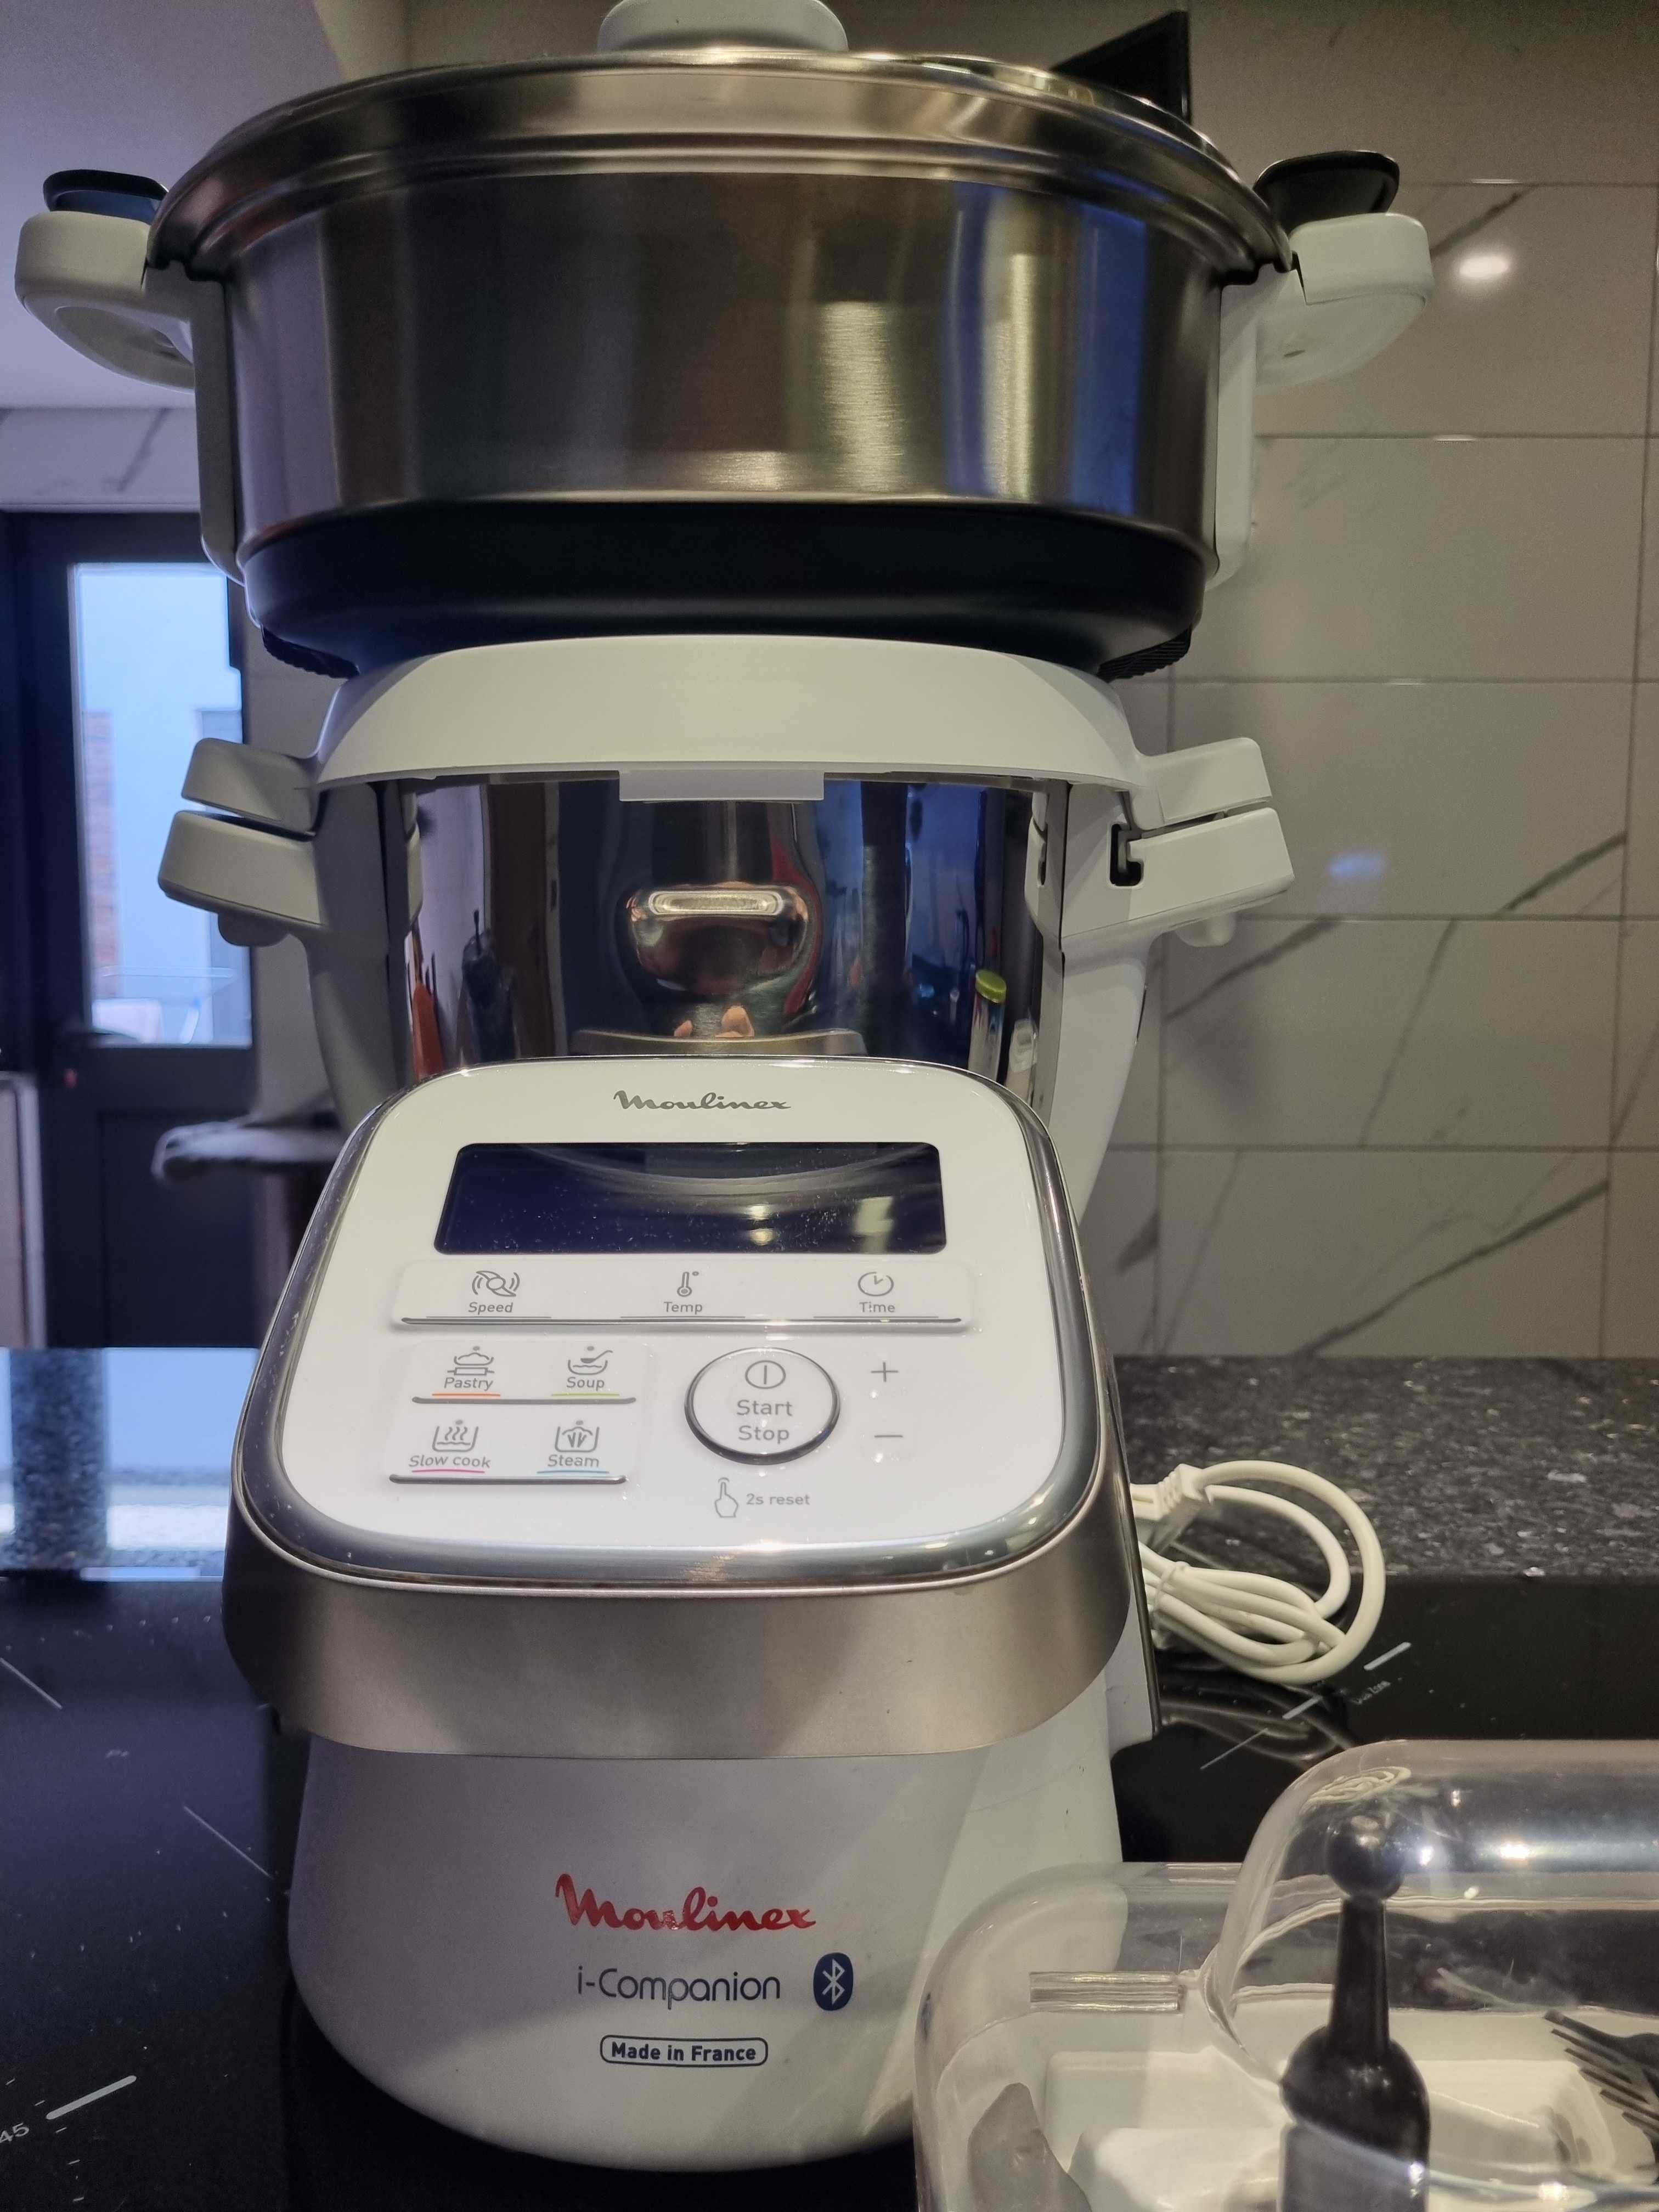 Robot de Cozinha Multifunções Moulinex I-Companion - Branco